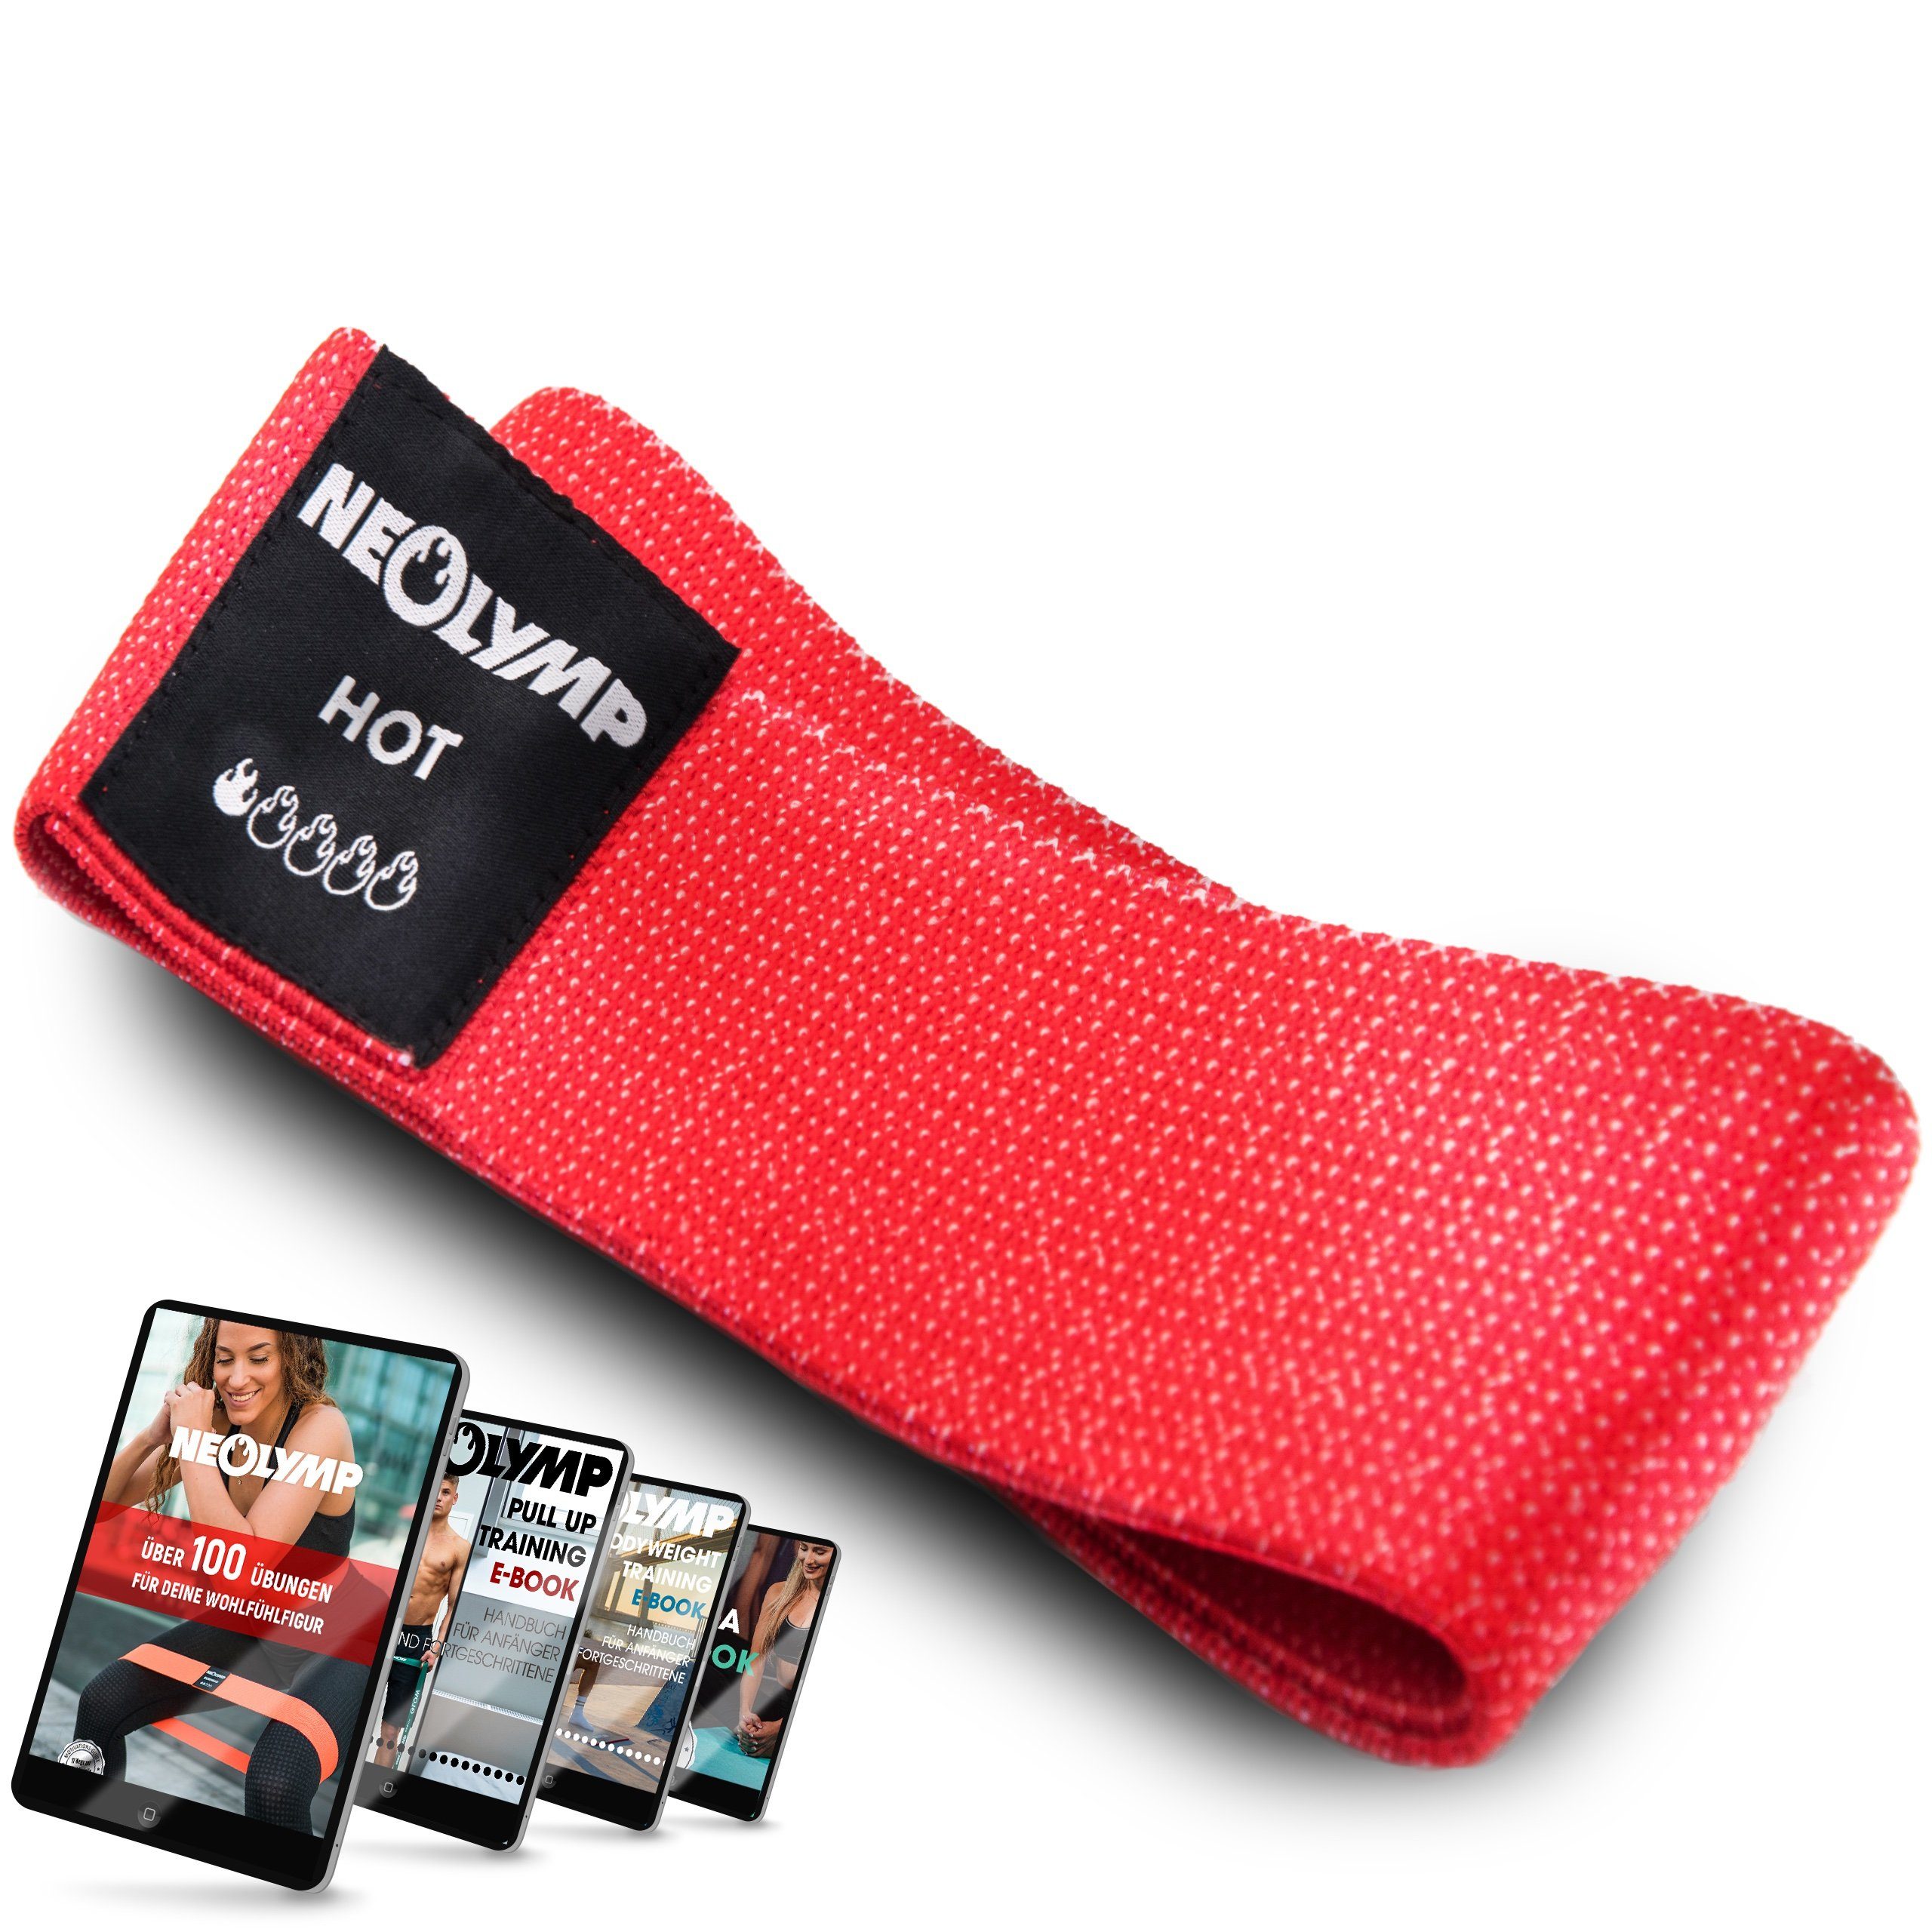 NEOLYMP Trainingsband Minibänder einzeln MB310 Stufe 1, 2,5 – 5 kg, Rot, Naturfasern, komfortabel, mit E-Book, langlebig, hygienisch, waschbar Stufe 1 rot